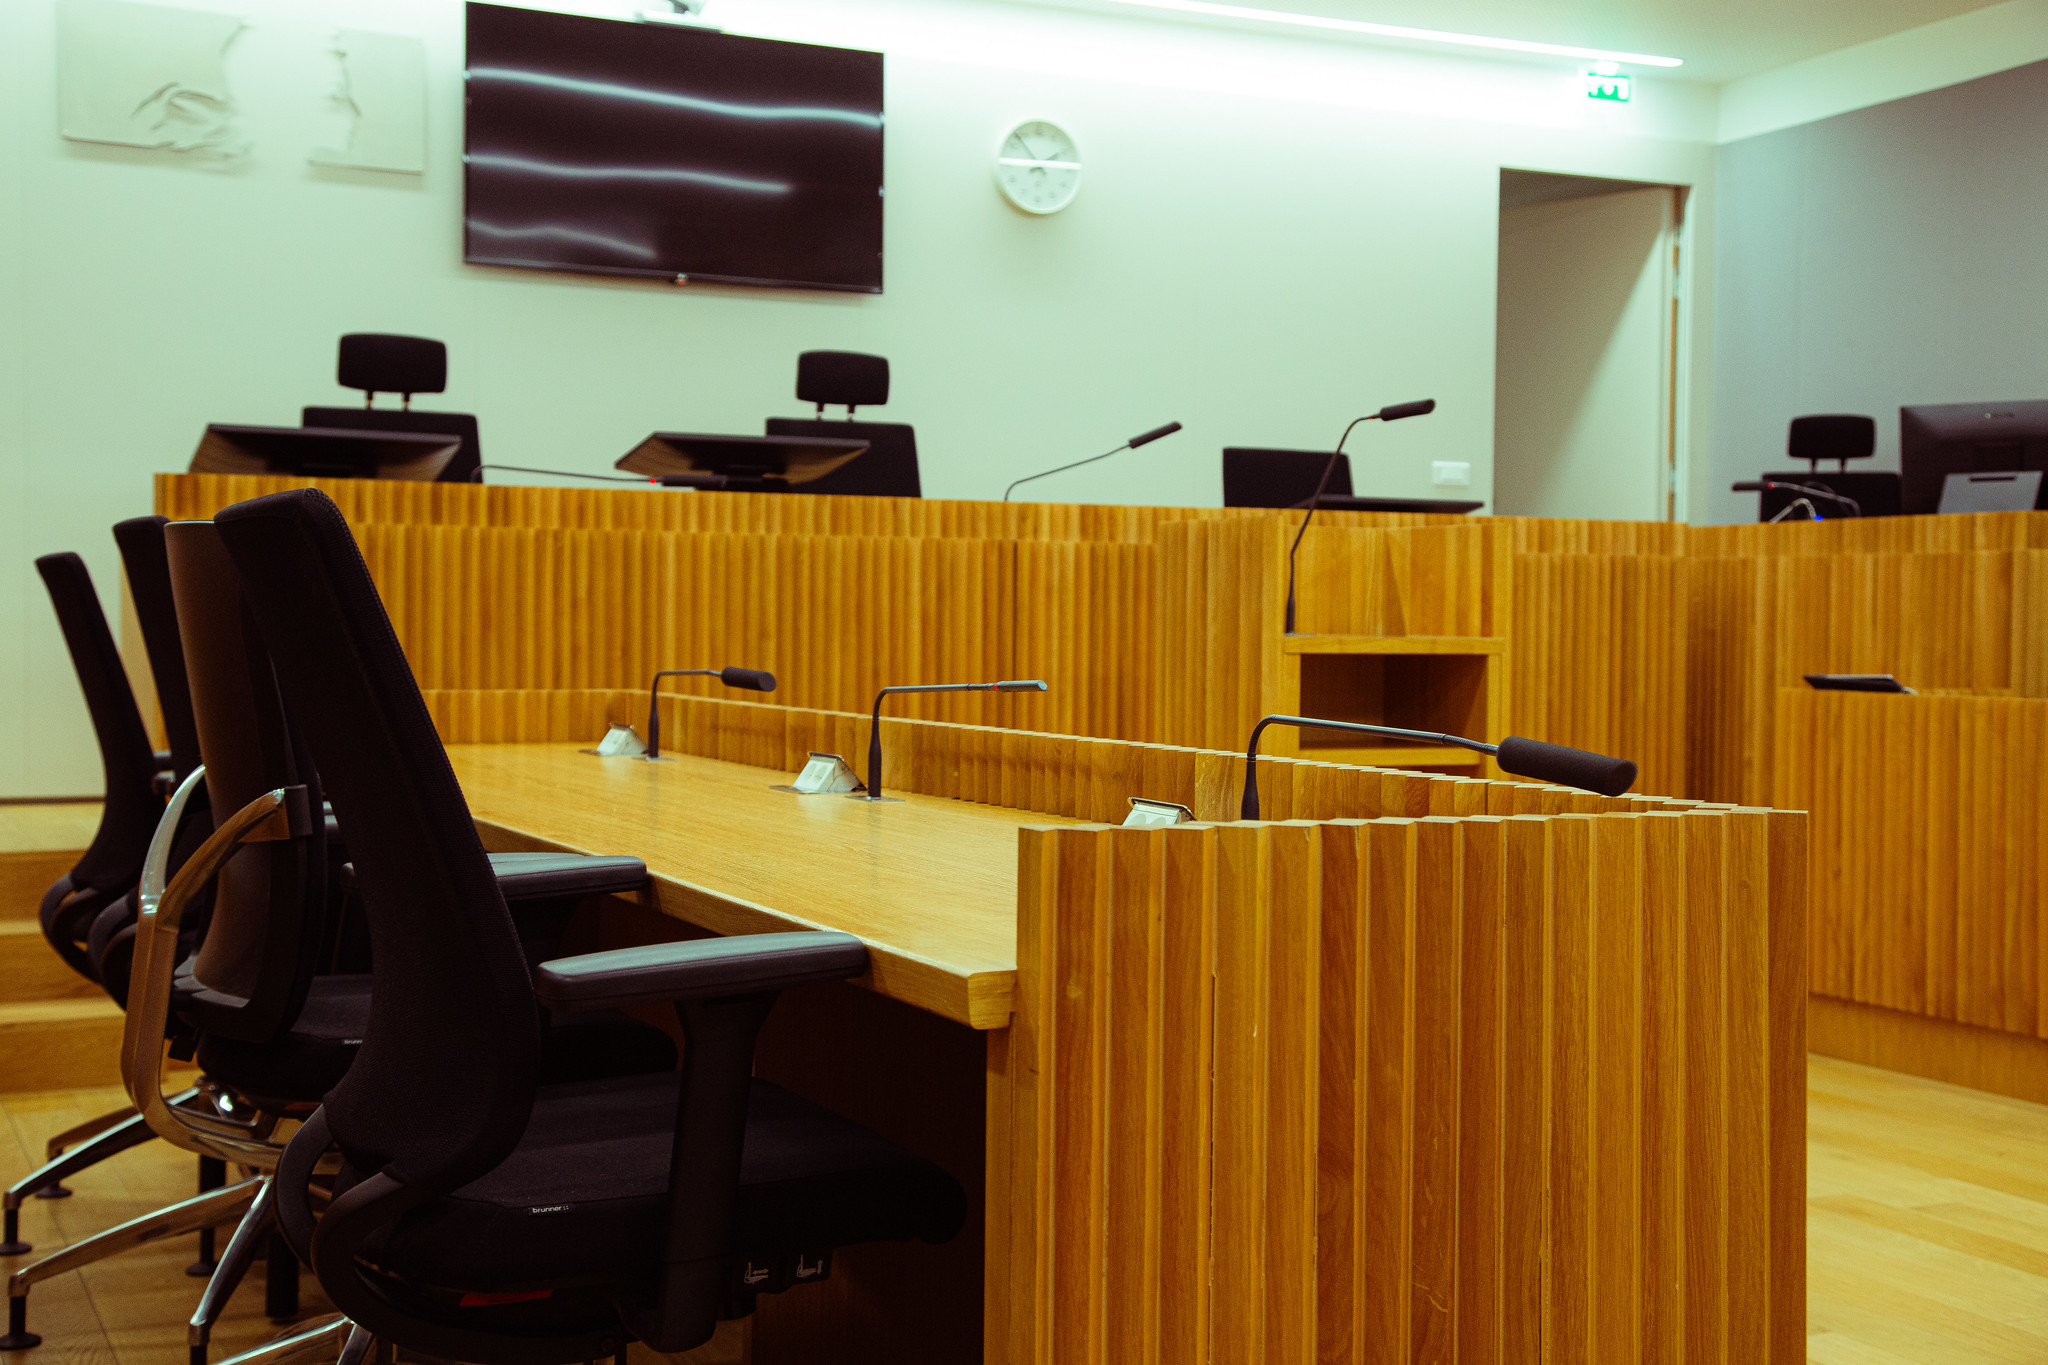 Au tribunal judiciaire de Strasbourg : beaucoup de poursuites, peu de mesures alternatives